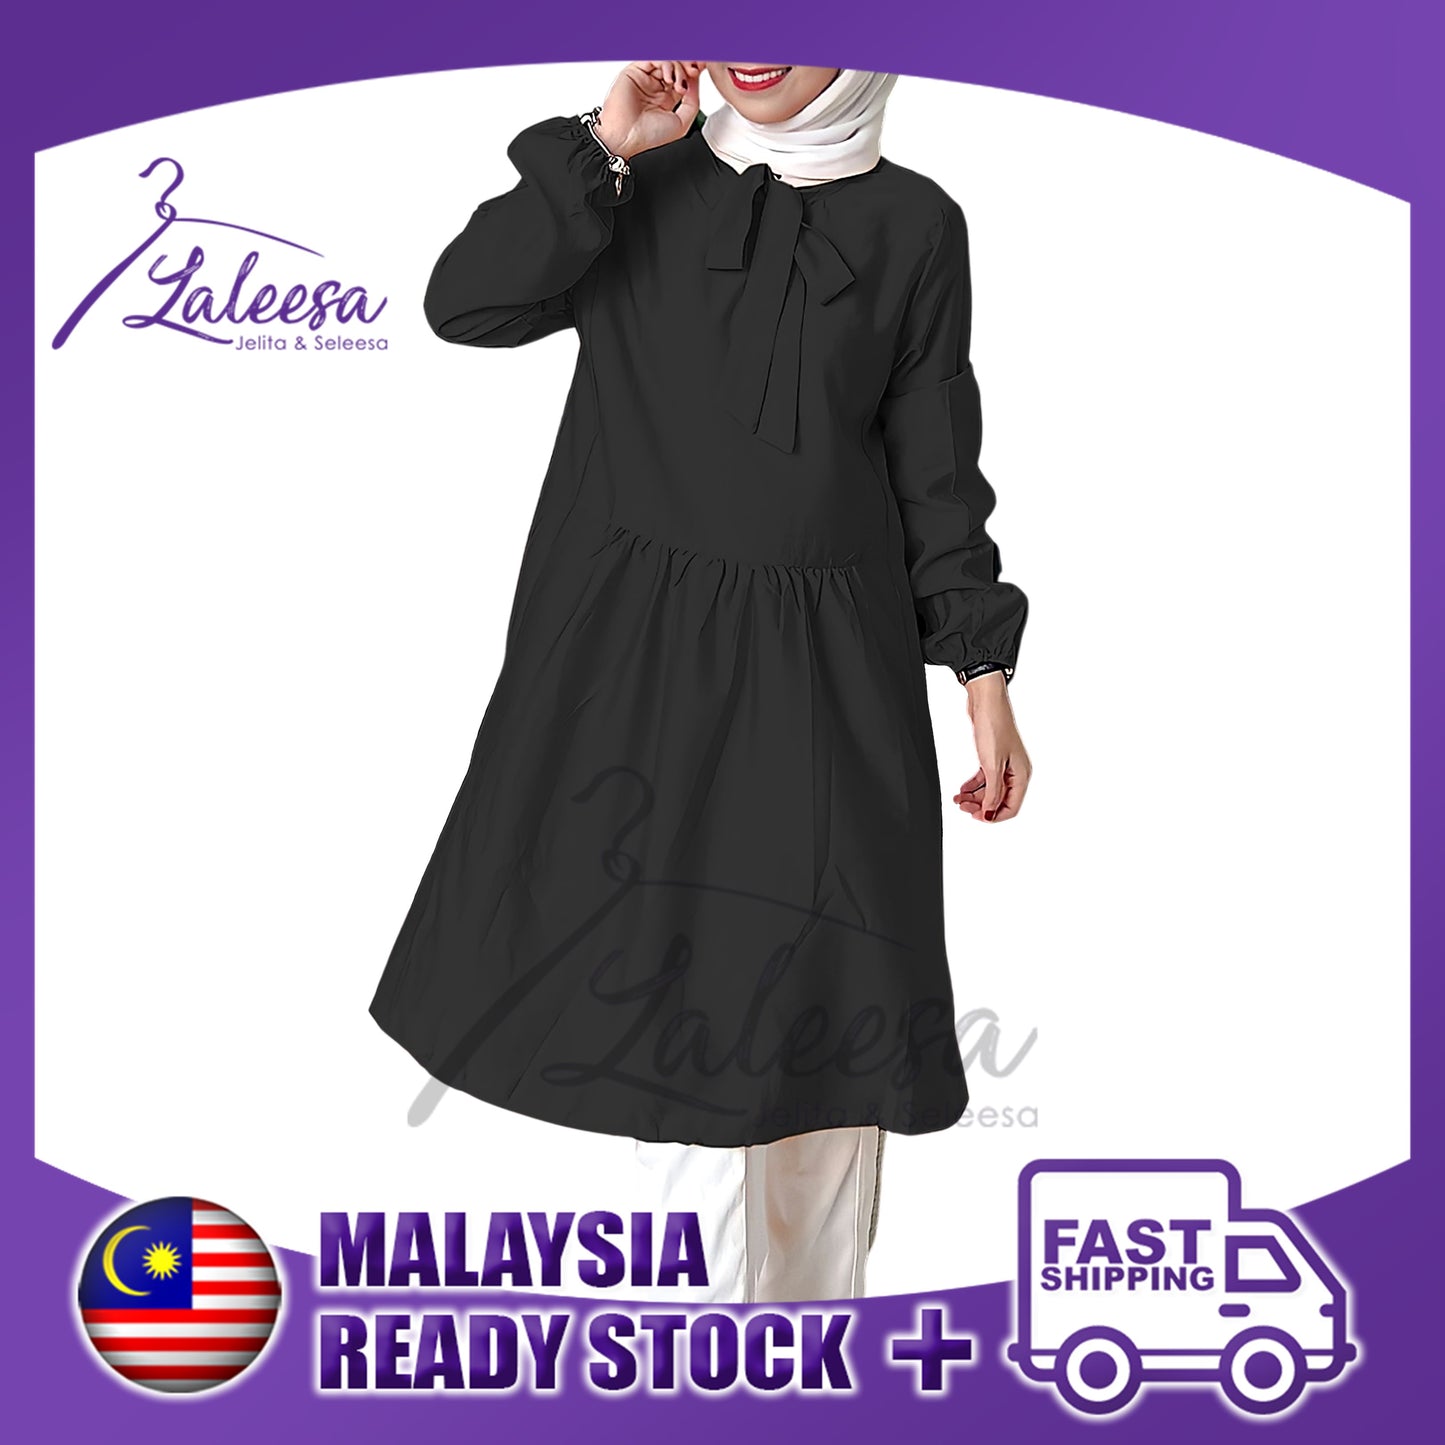 LALEESA TB441451 BLOUSE NABEEHA Plain Color Tie Collar Blouse Muslimah Blouse Women Blouse Baju Muslimah Baju Perempuan